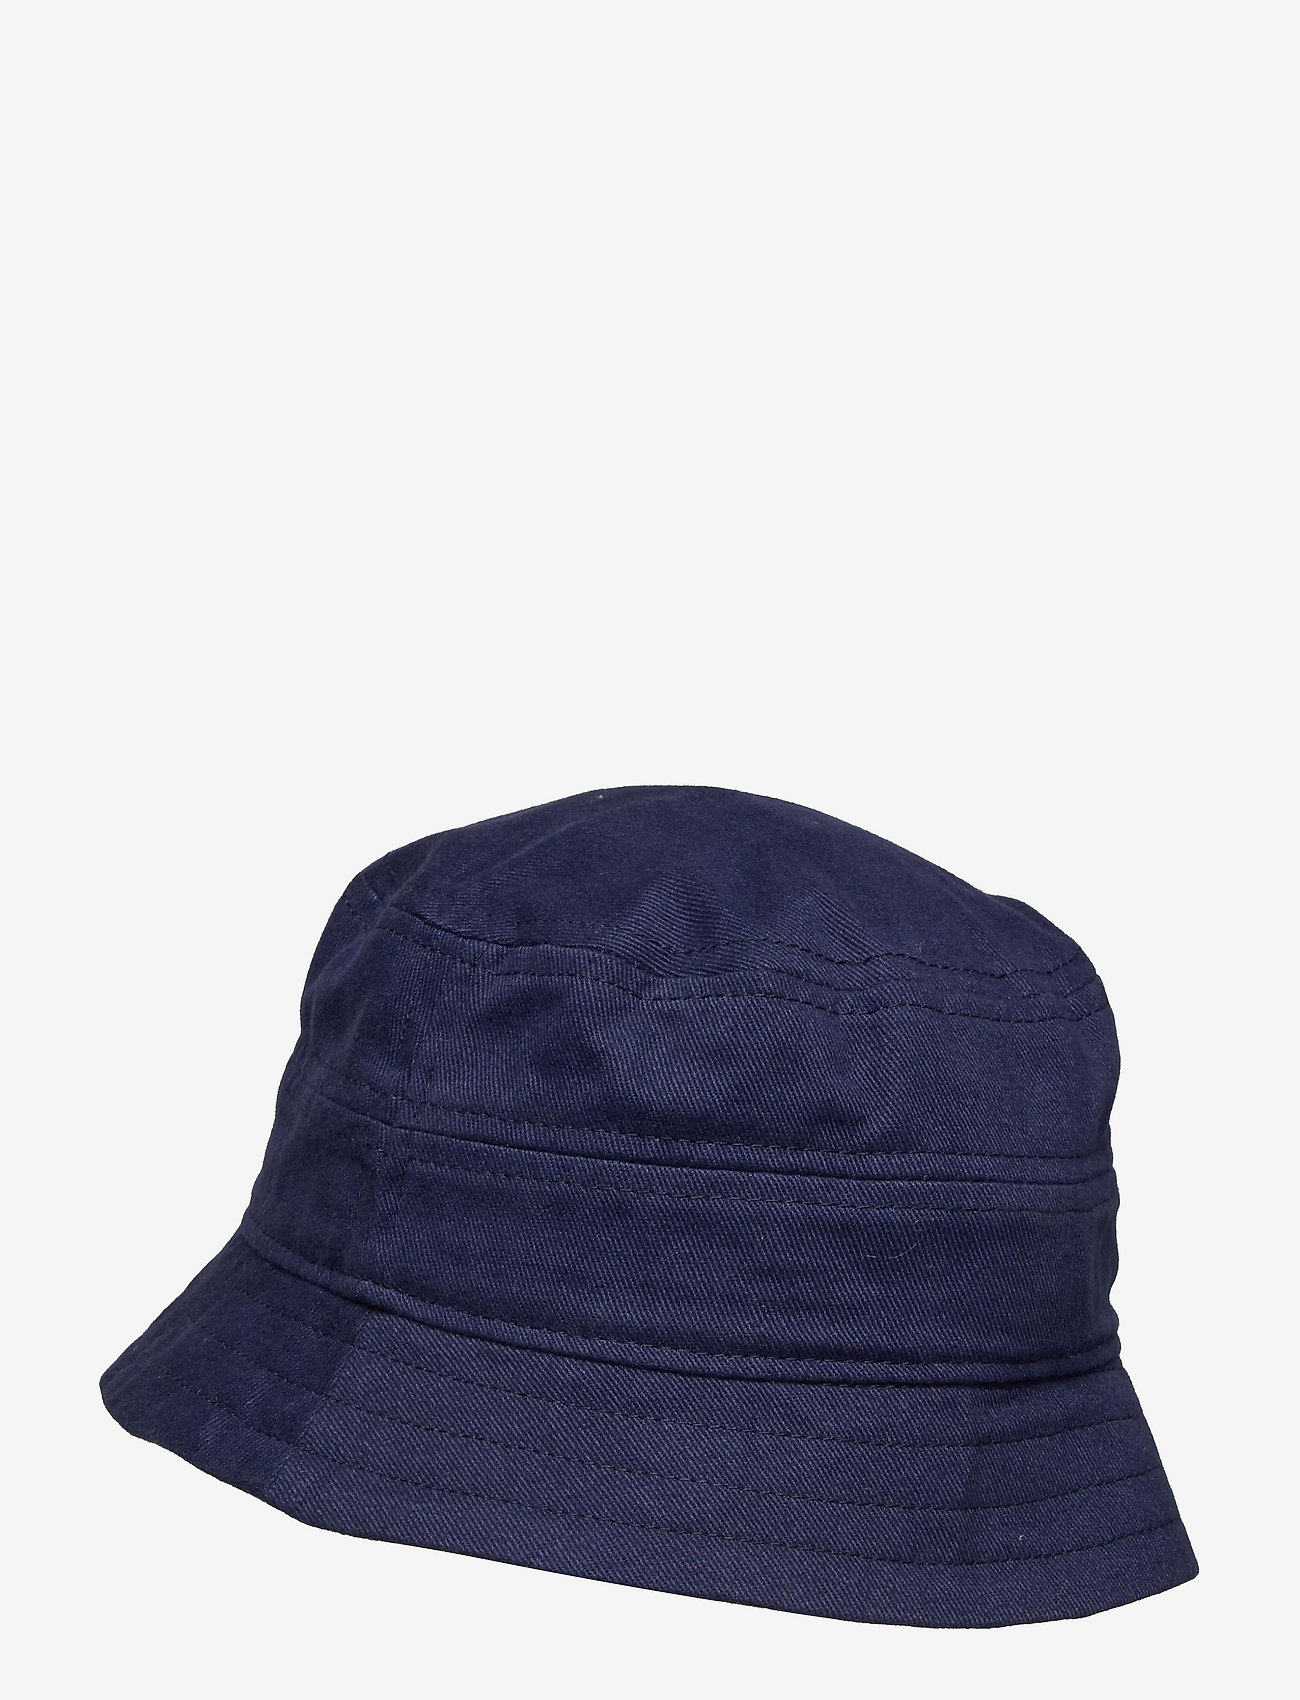 Timberland Bucket Hat - Hats | Boozt.com